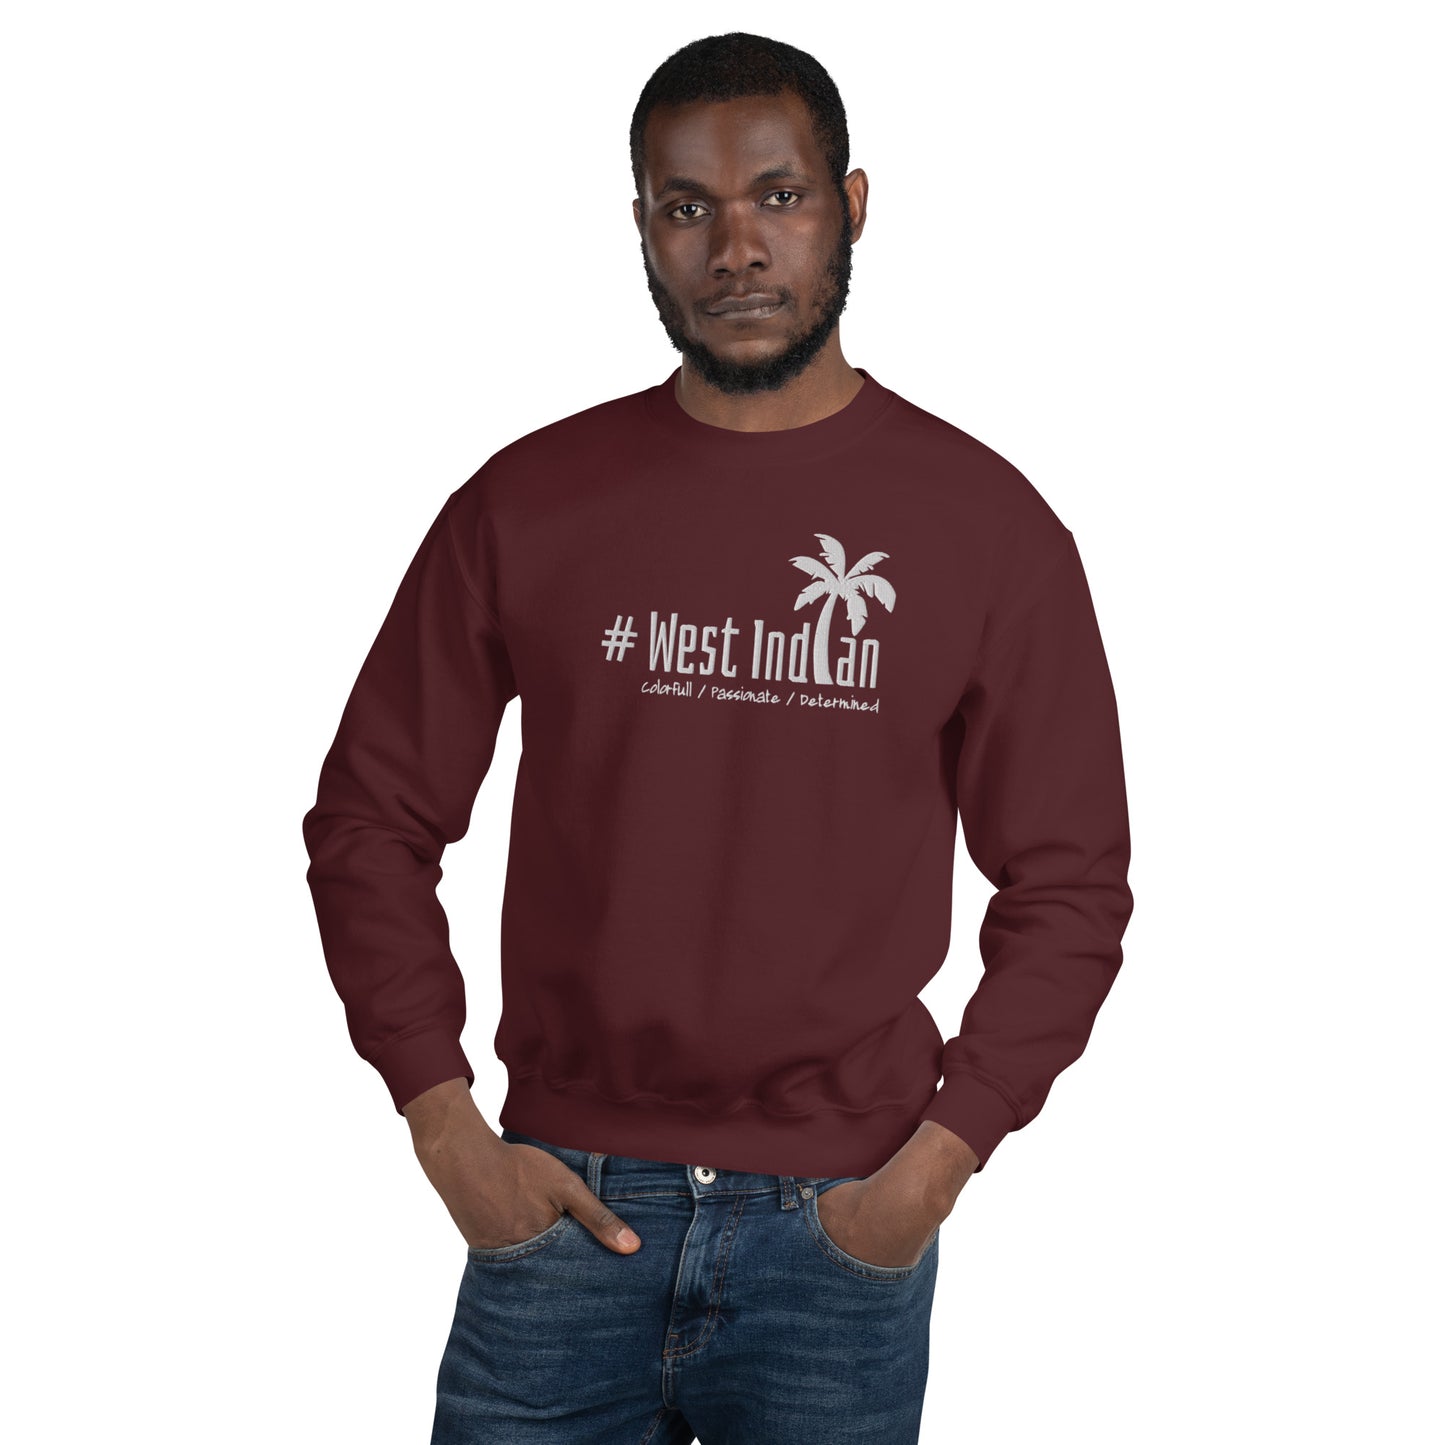 #West Indian - Unisex Sweatshirt